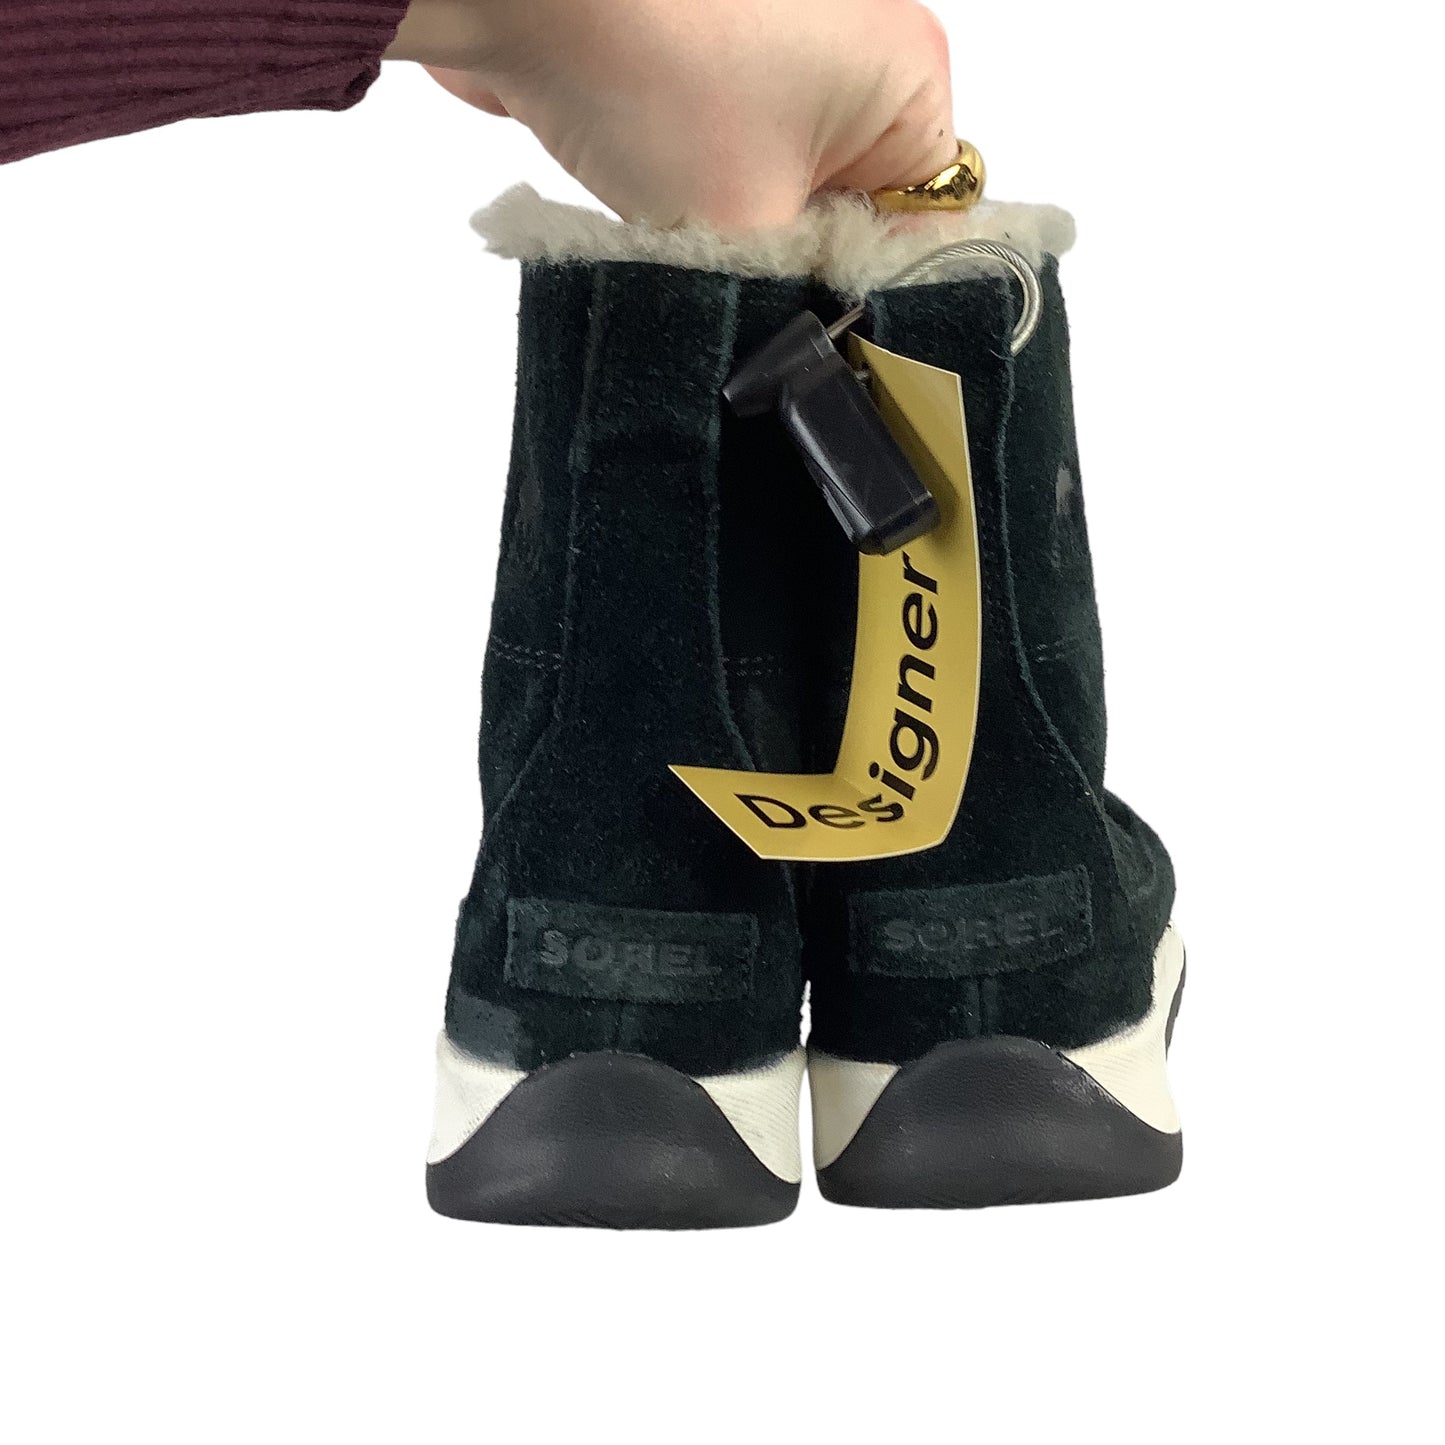 Boots Designer By Sorel  Size: 6